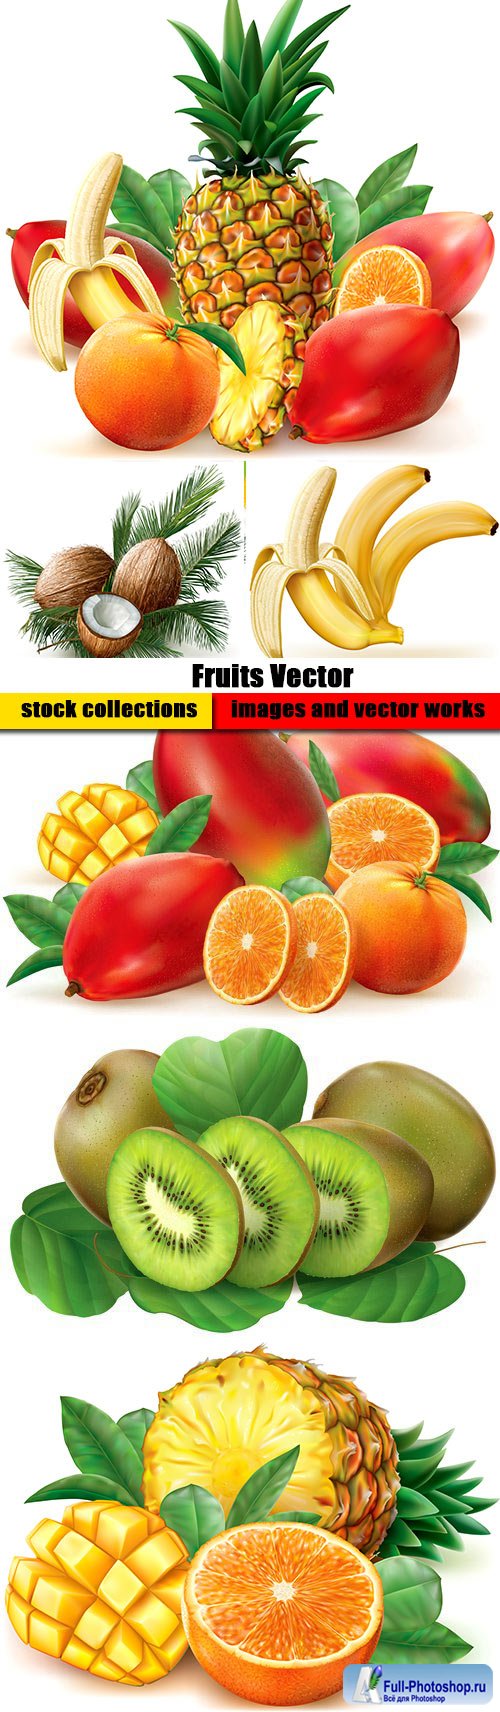 Fruits Vector